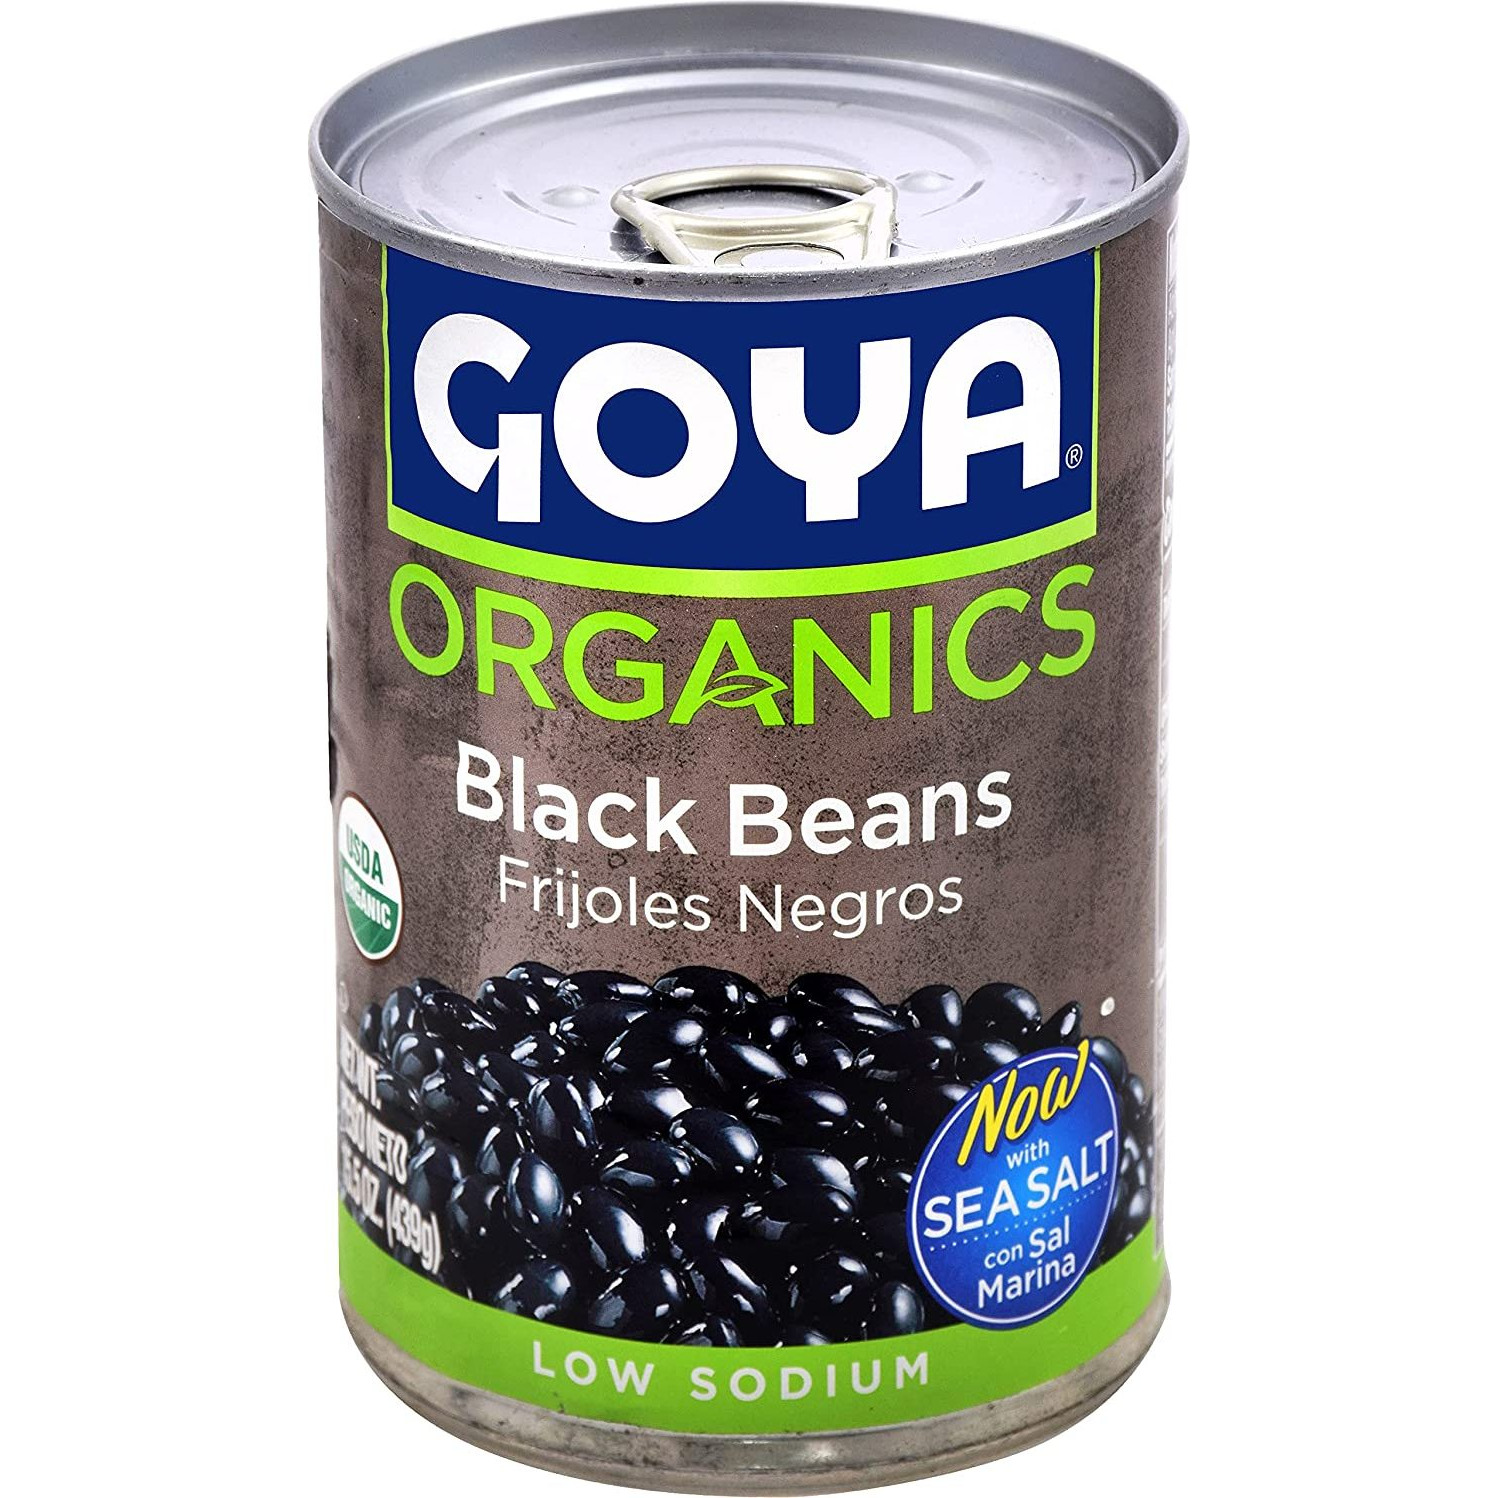 Goya Organics Black Beans - 15.5 Oz (439 Gm)